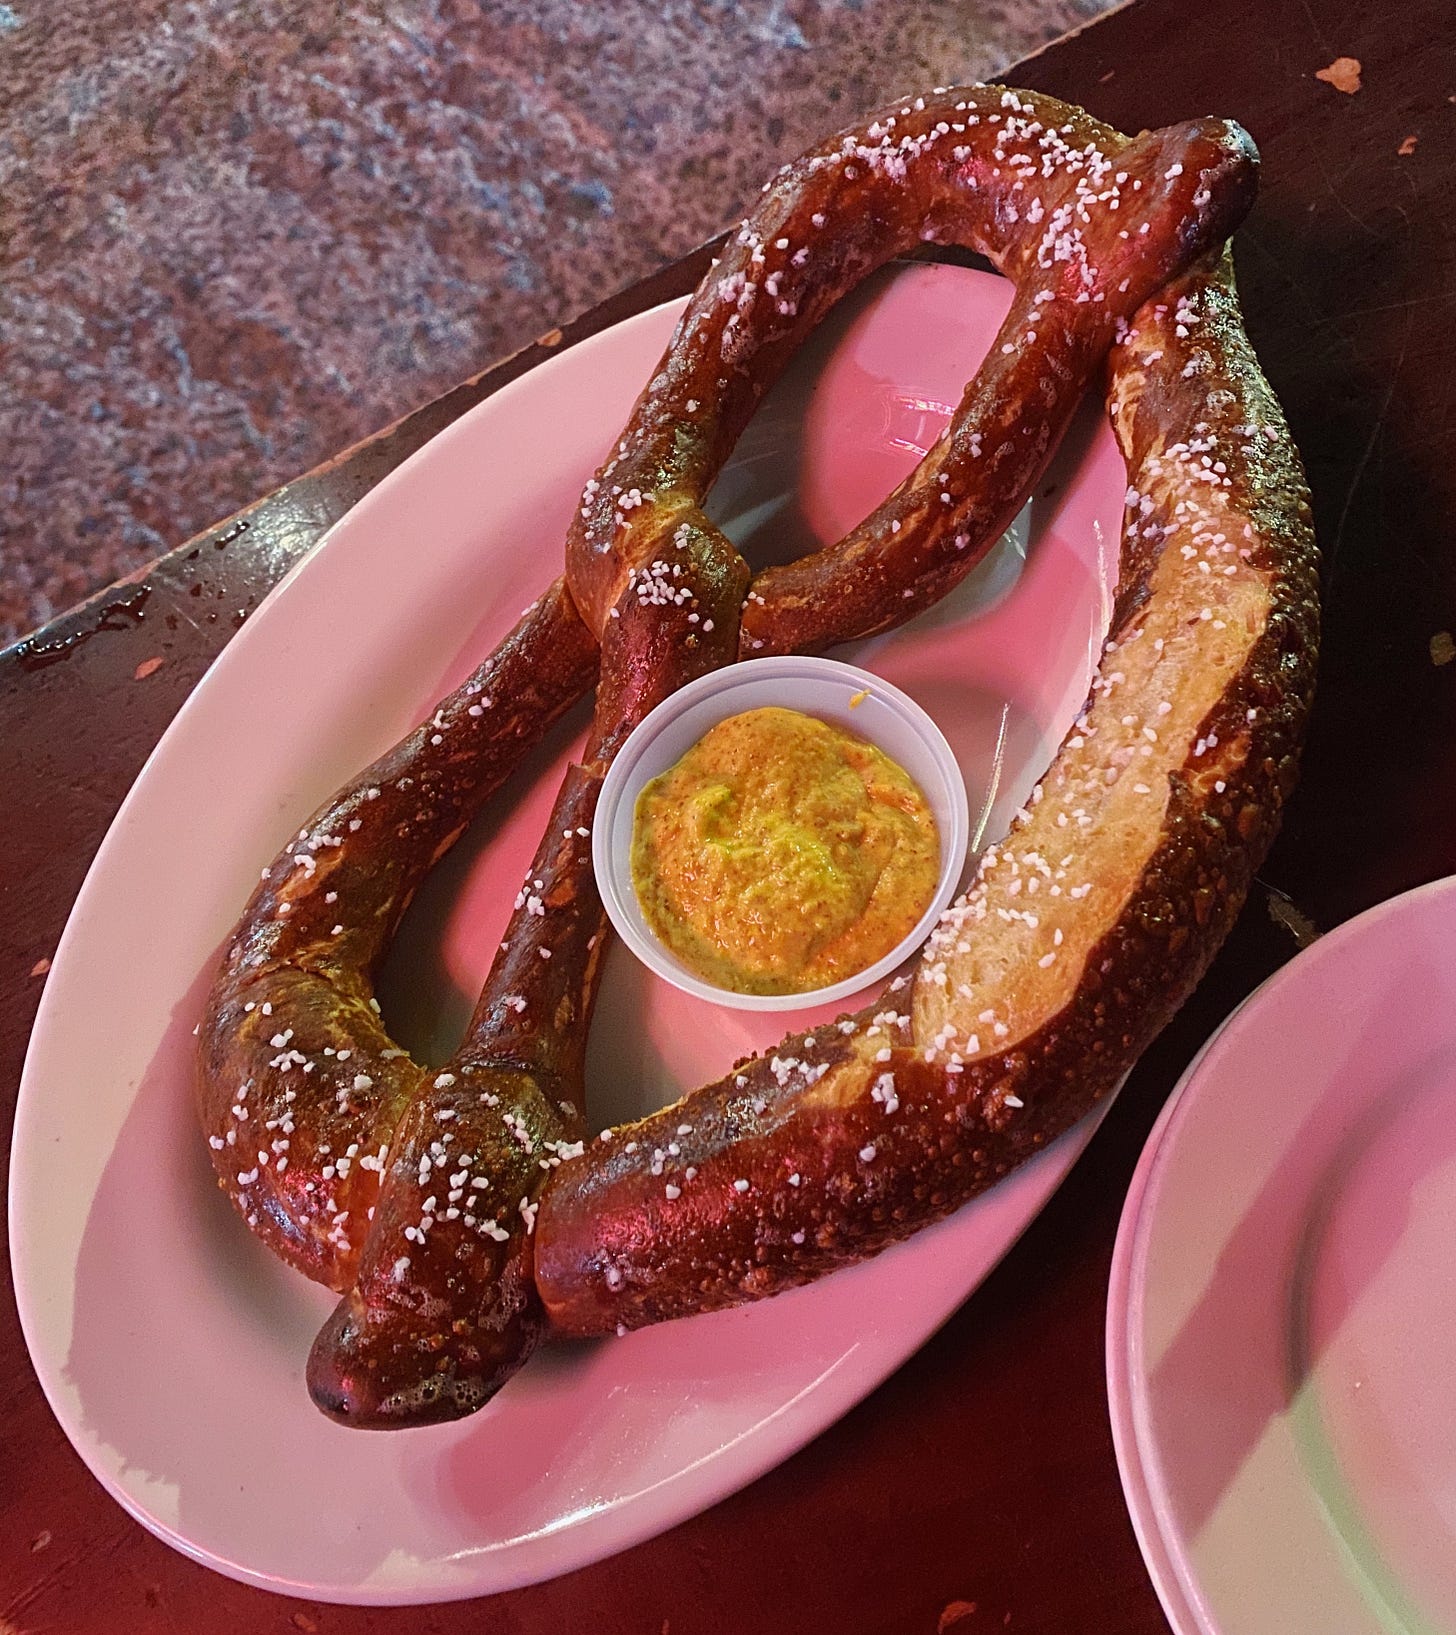 Old Town Bar's giant soft pretzel